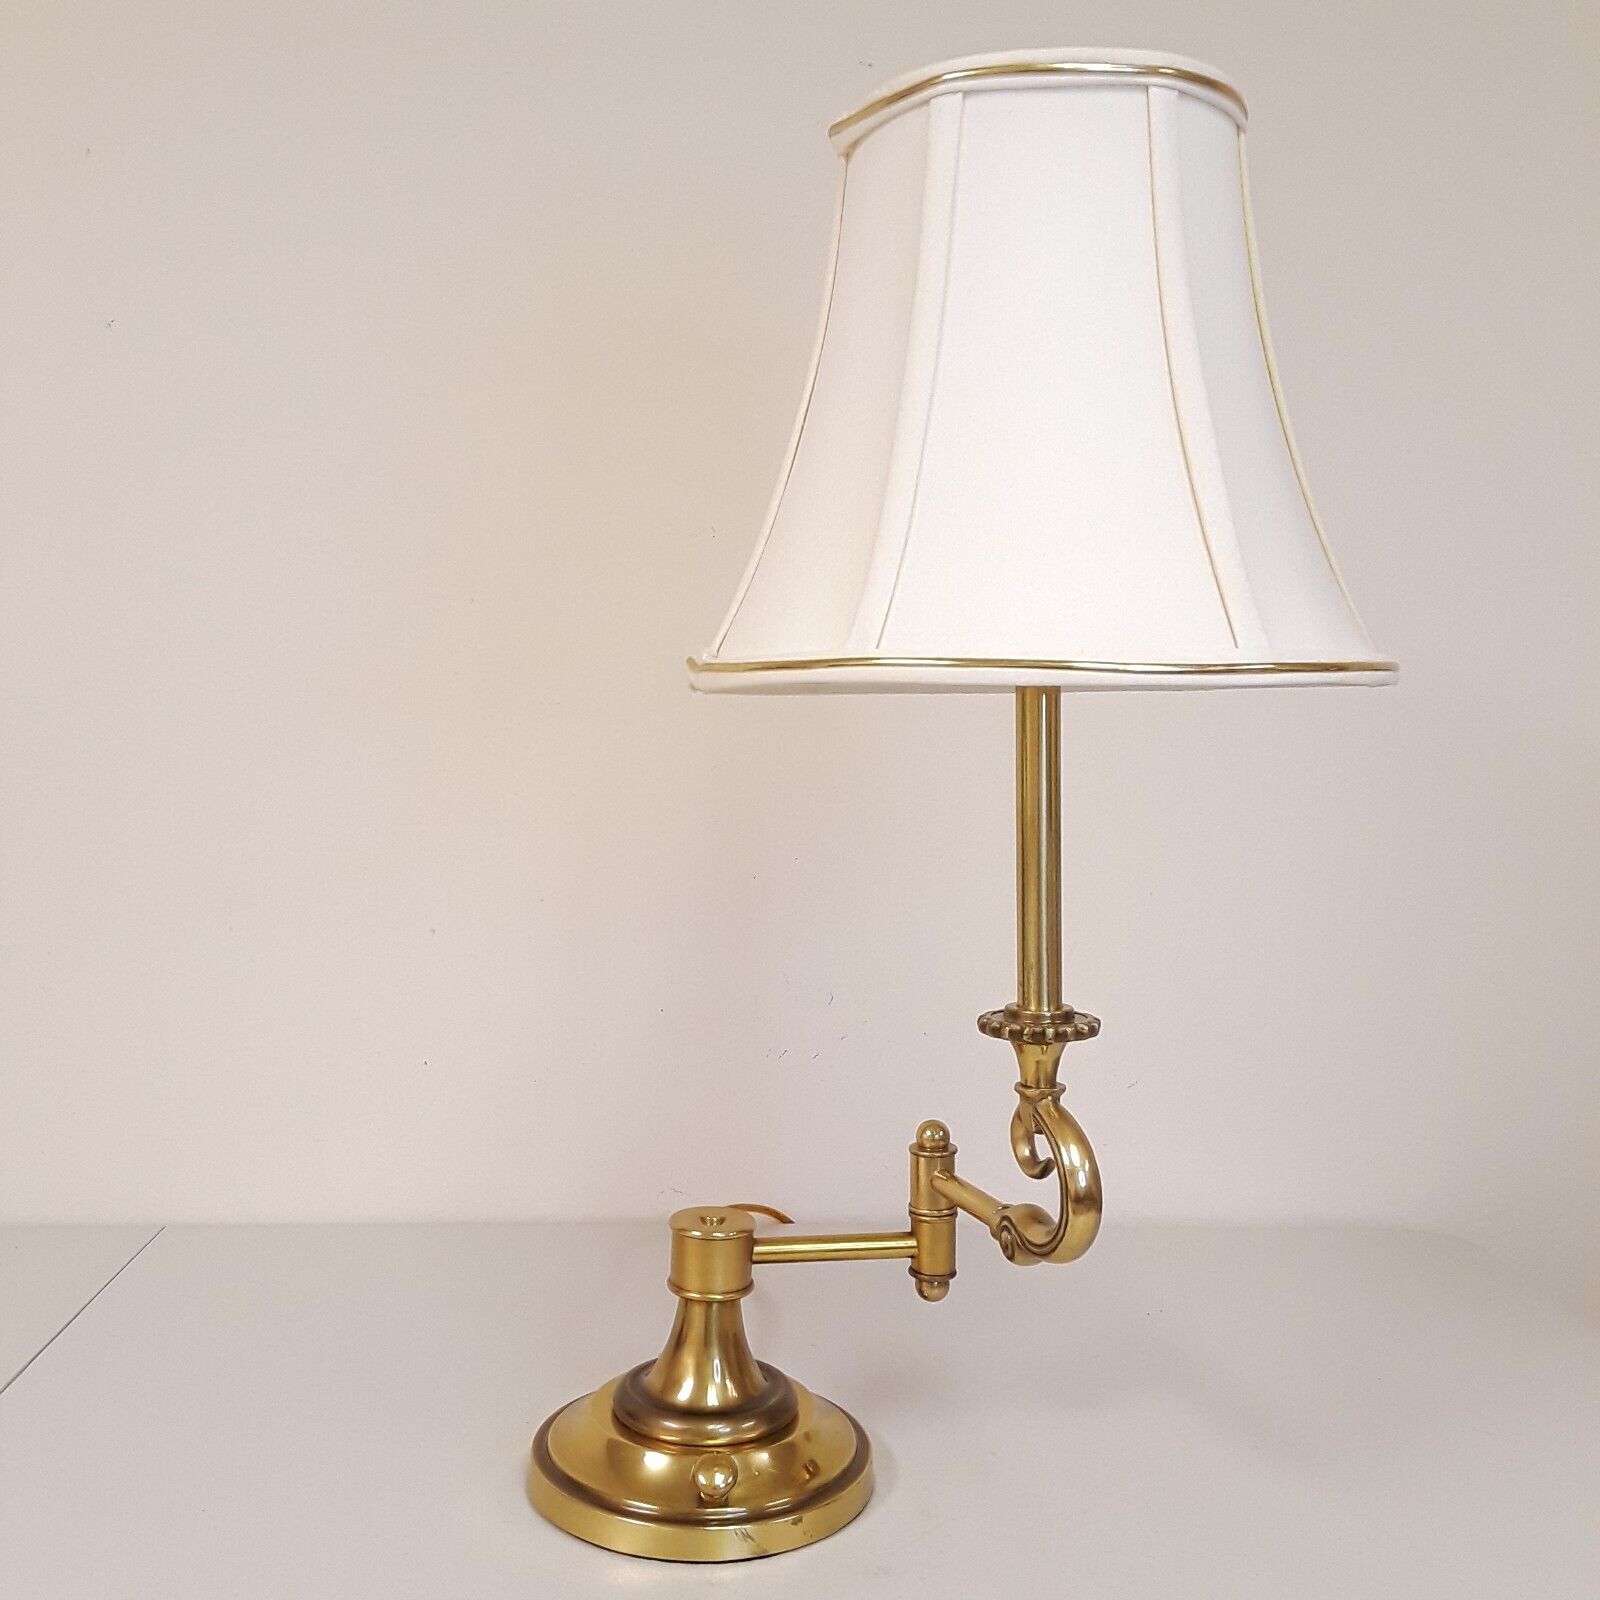 Stiffel Brass Swing Arm Table Lamp with Original Shade